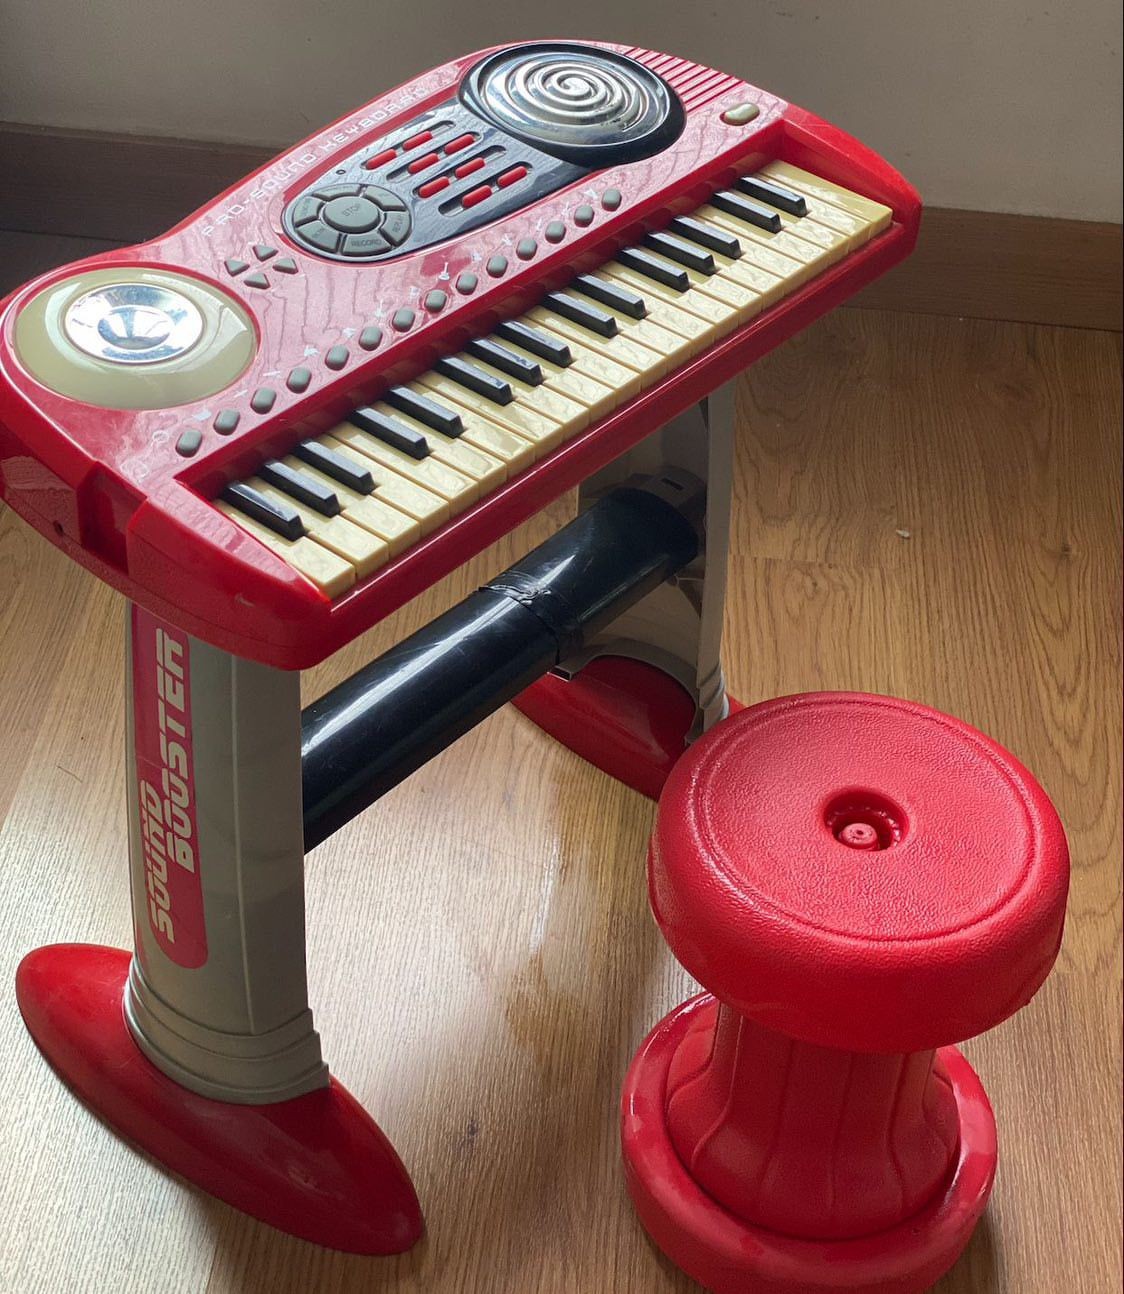 Piano Light & Sound Toy